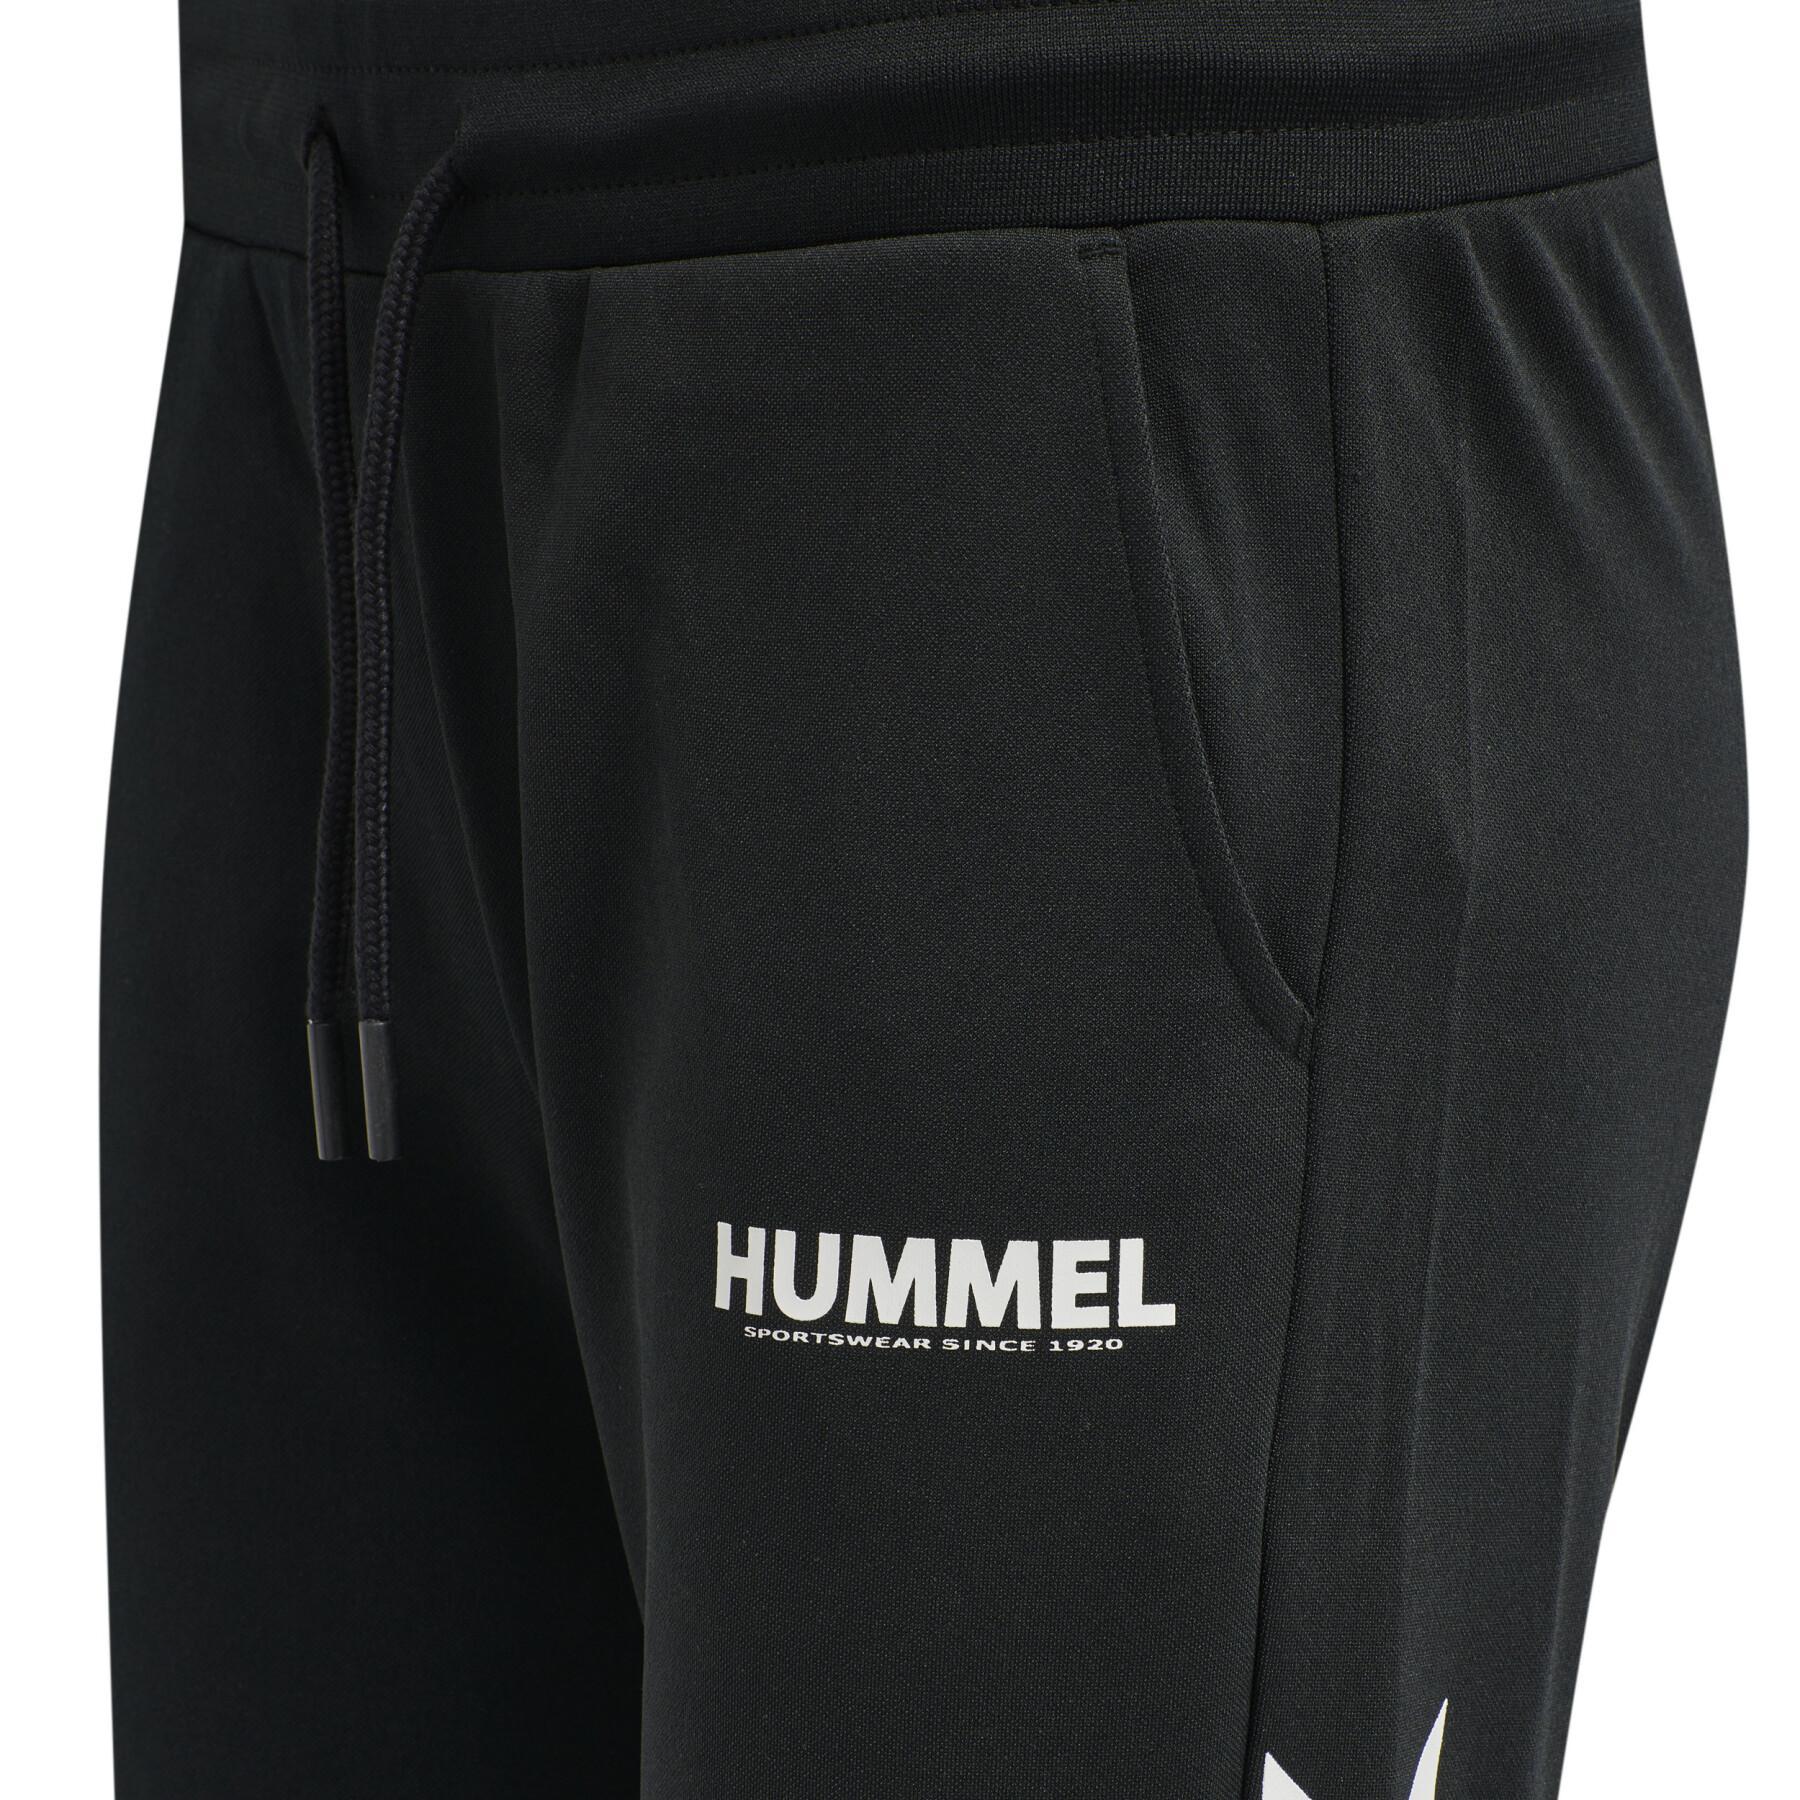 Damski strój do joggingu Hummel Legacy